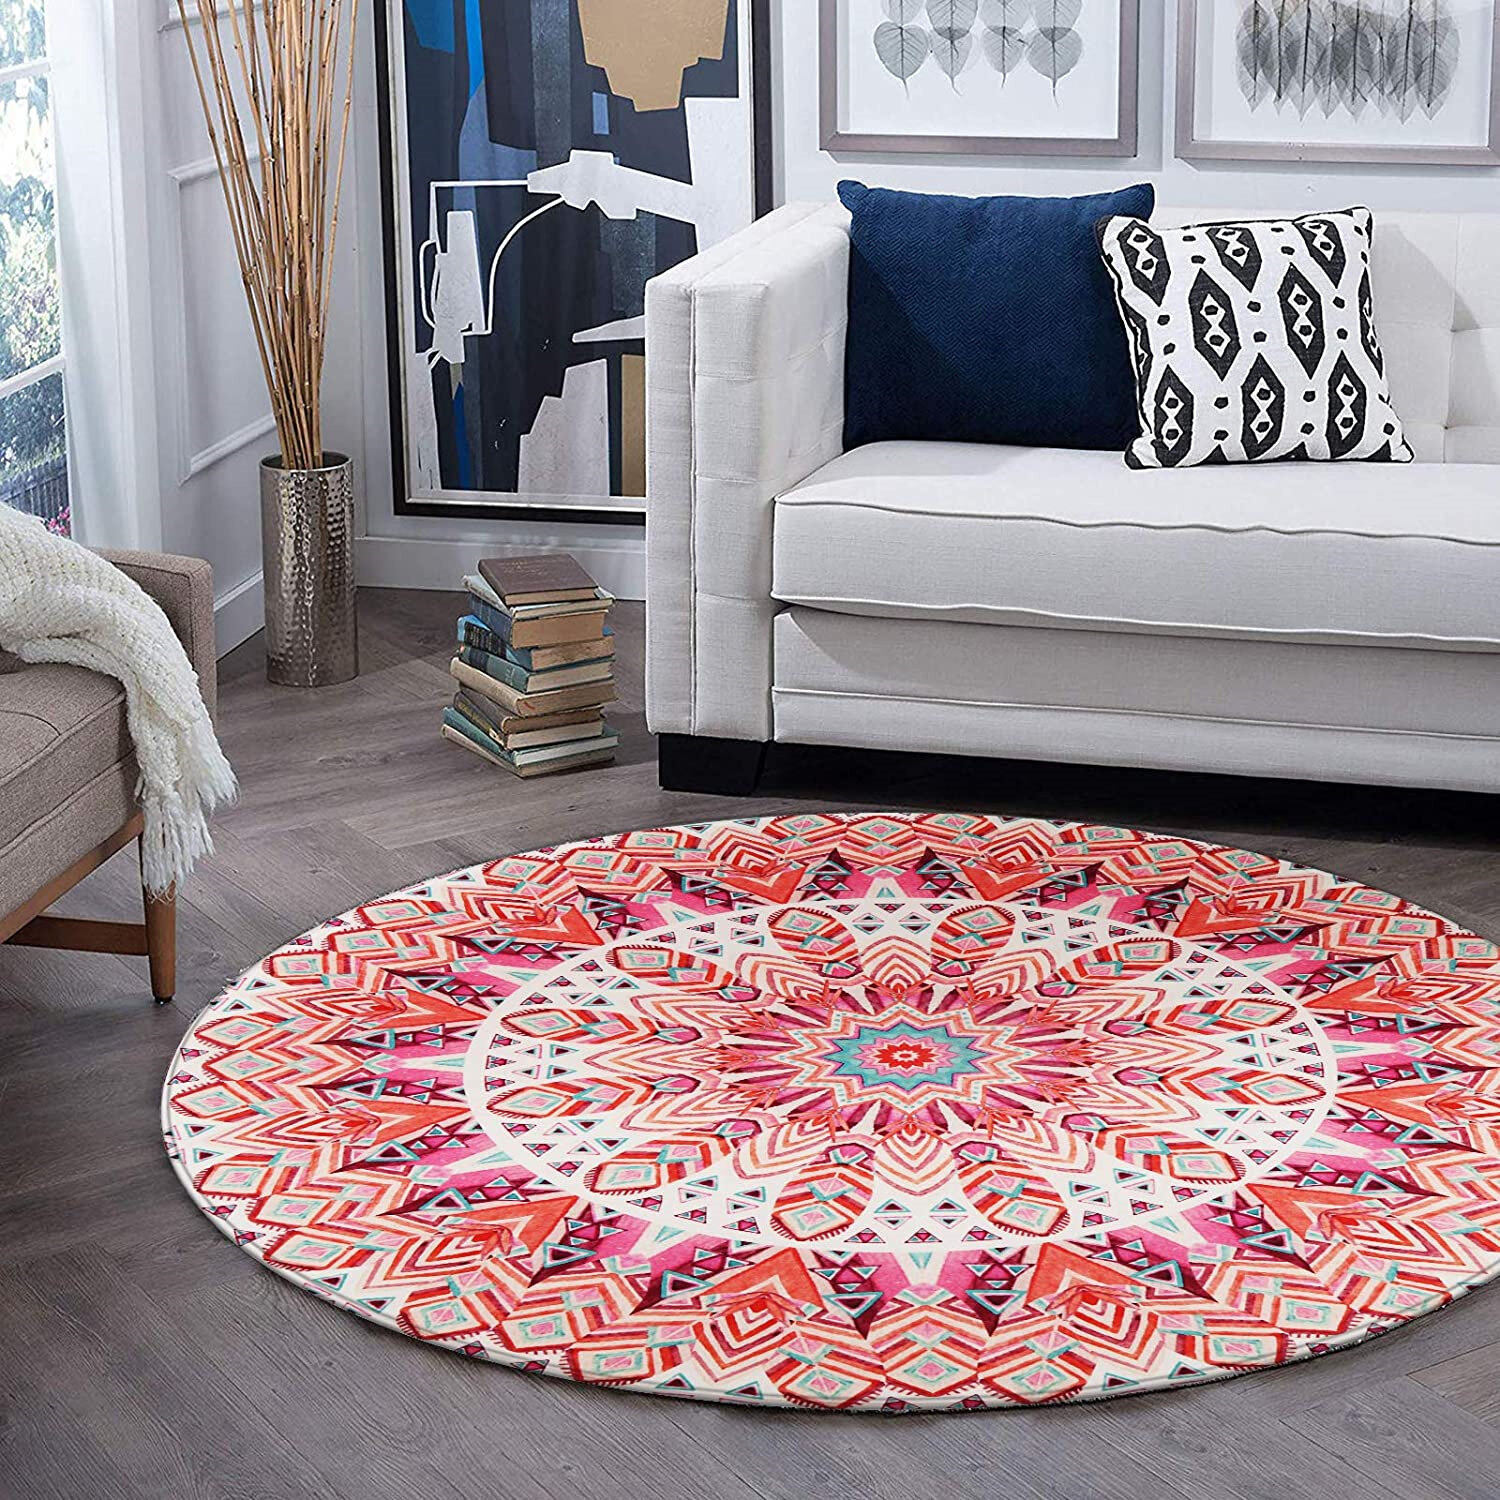 Round Floor Mat Bedroom Carpet Living Room Area Rugs Abstract Mandala Flower 